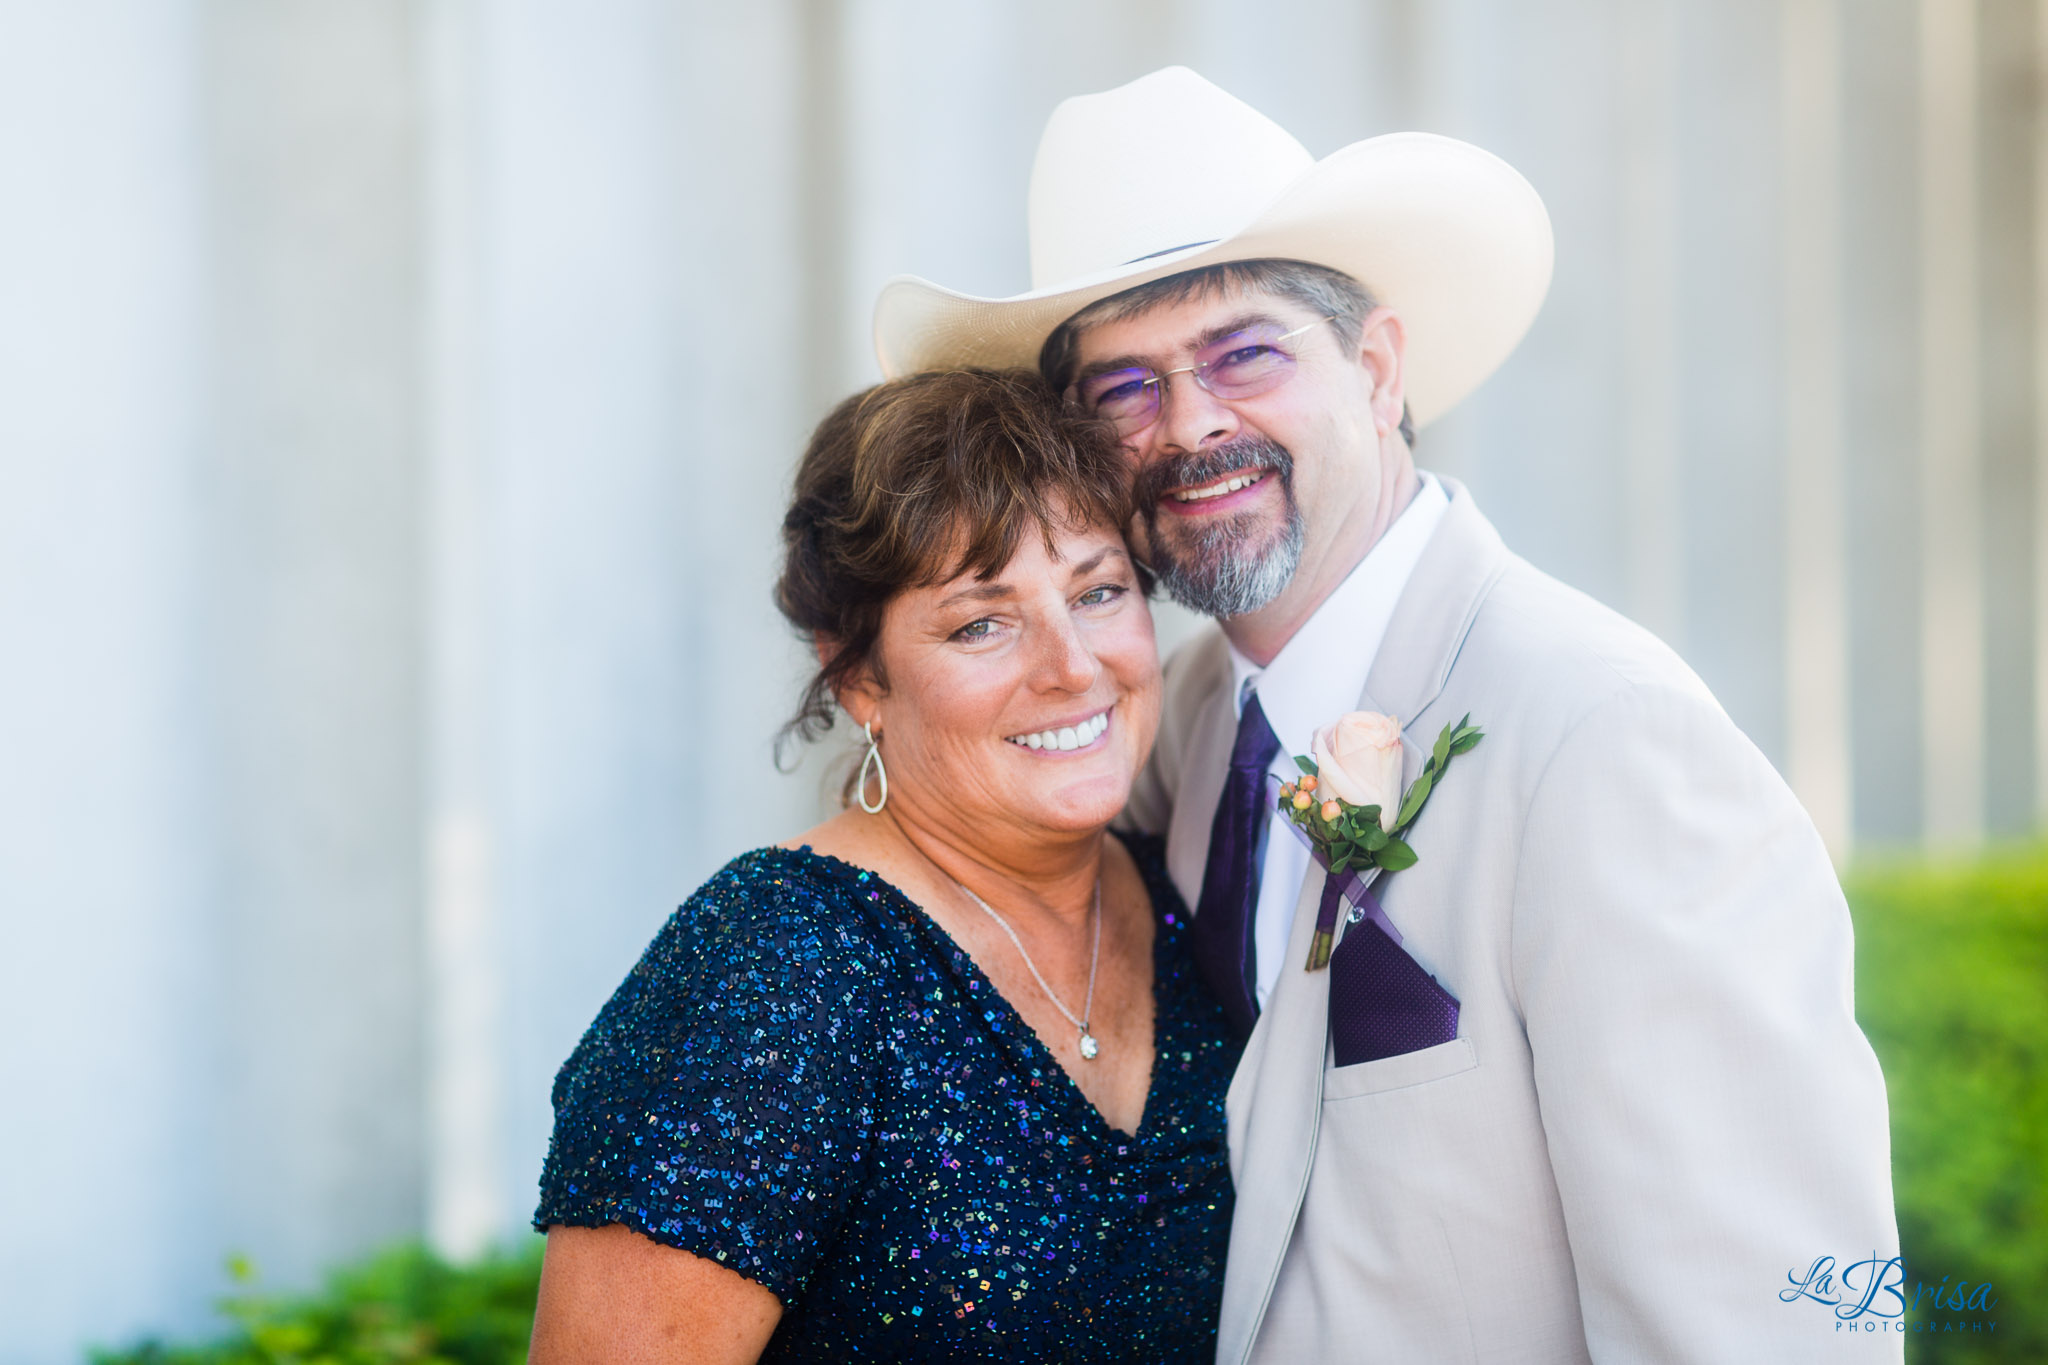 Houston St Ballroom Wedding Portrait Parents Groom